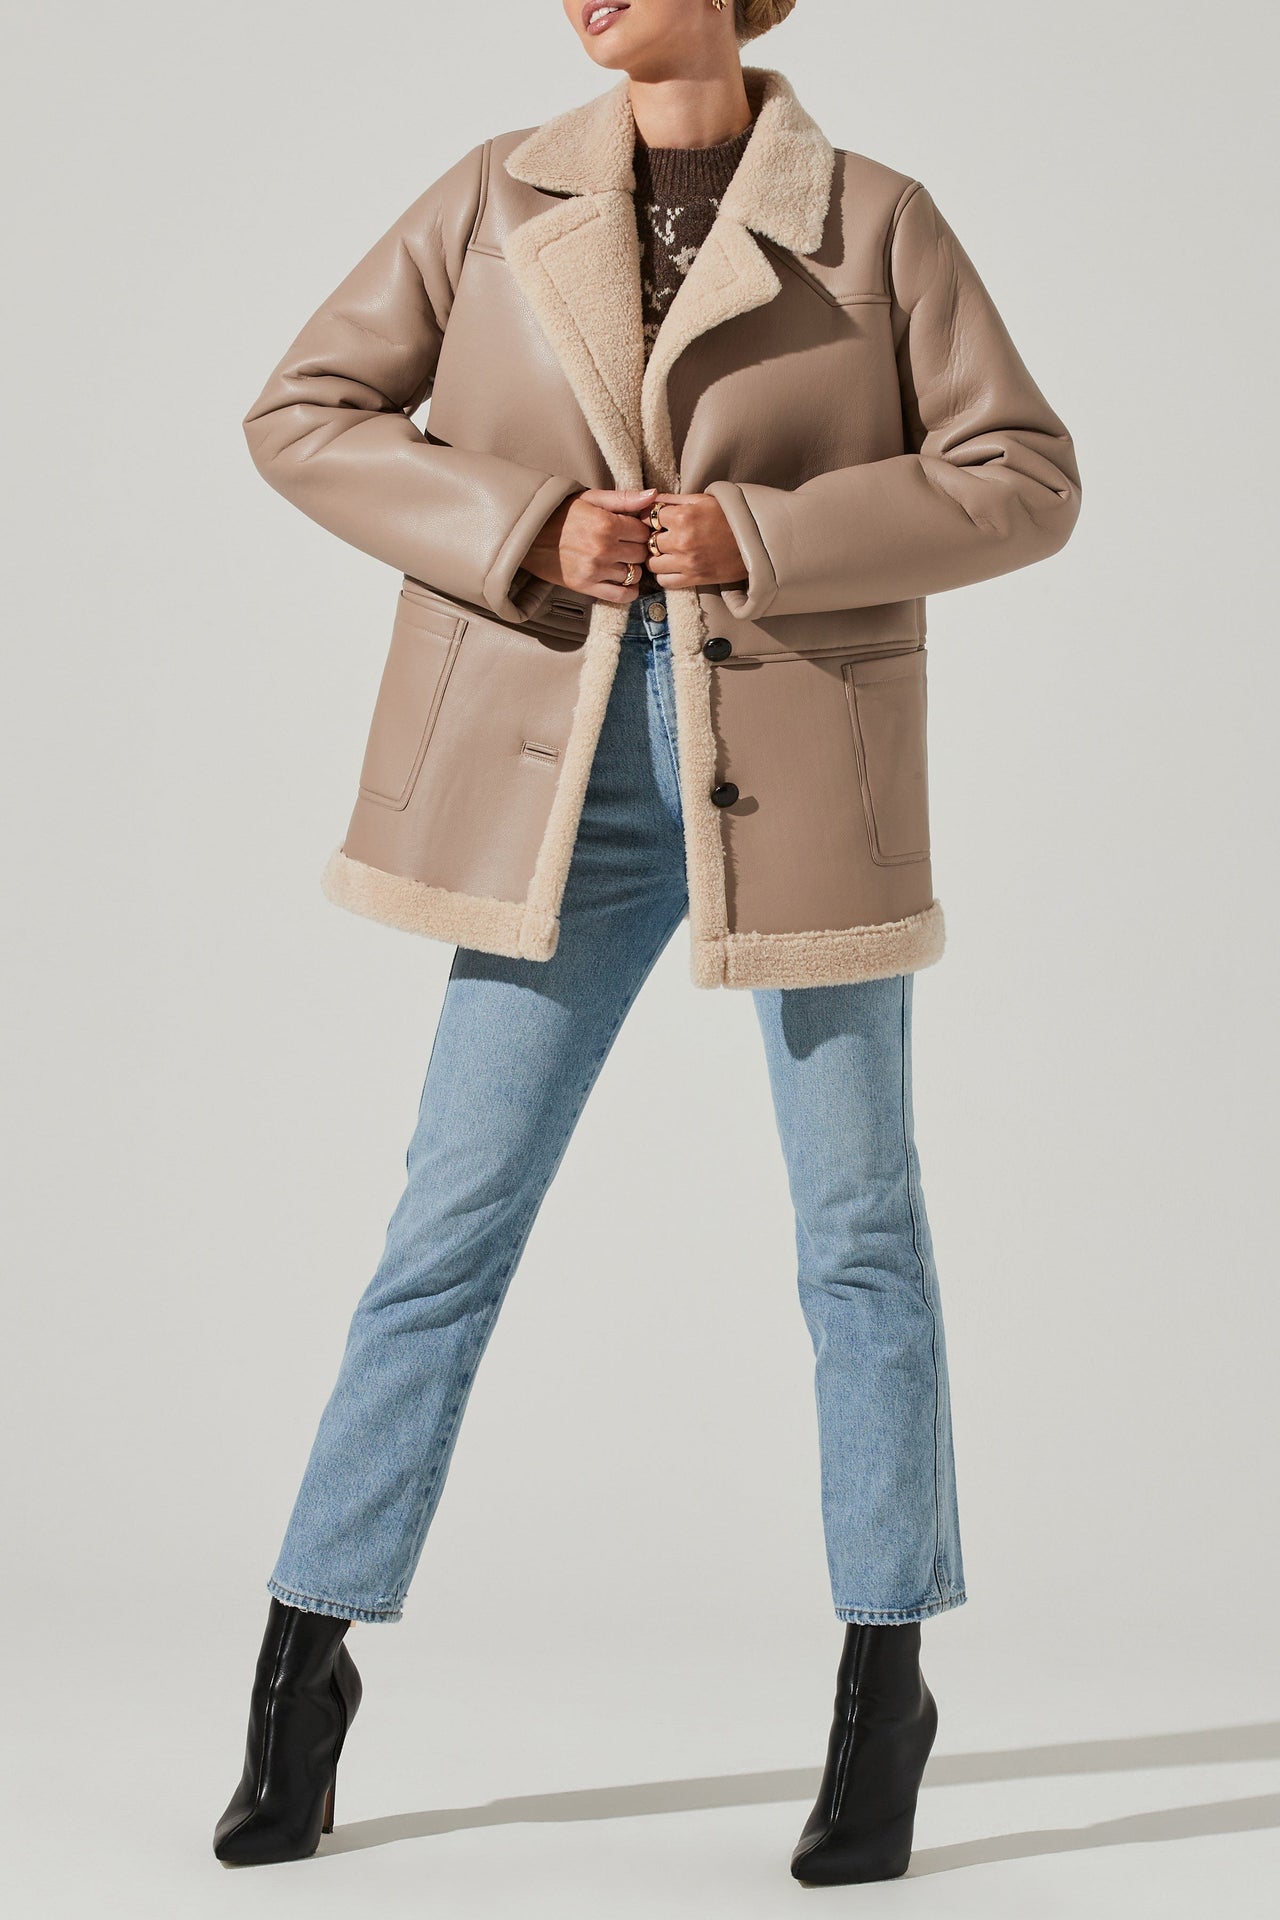 Francine Shearling Jacket Taupe, Jacket by ASTR | LIT Boutique